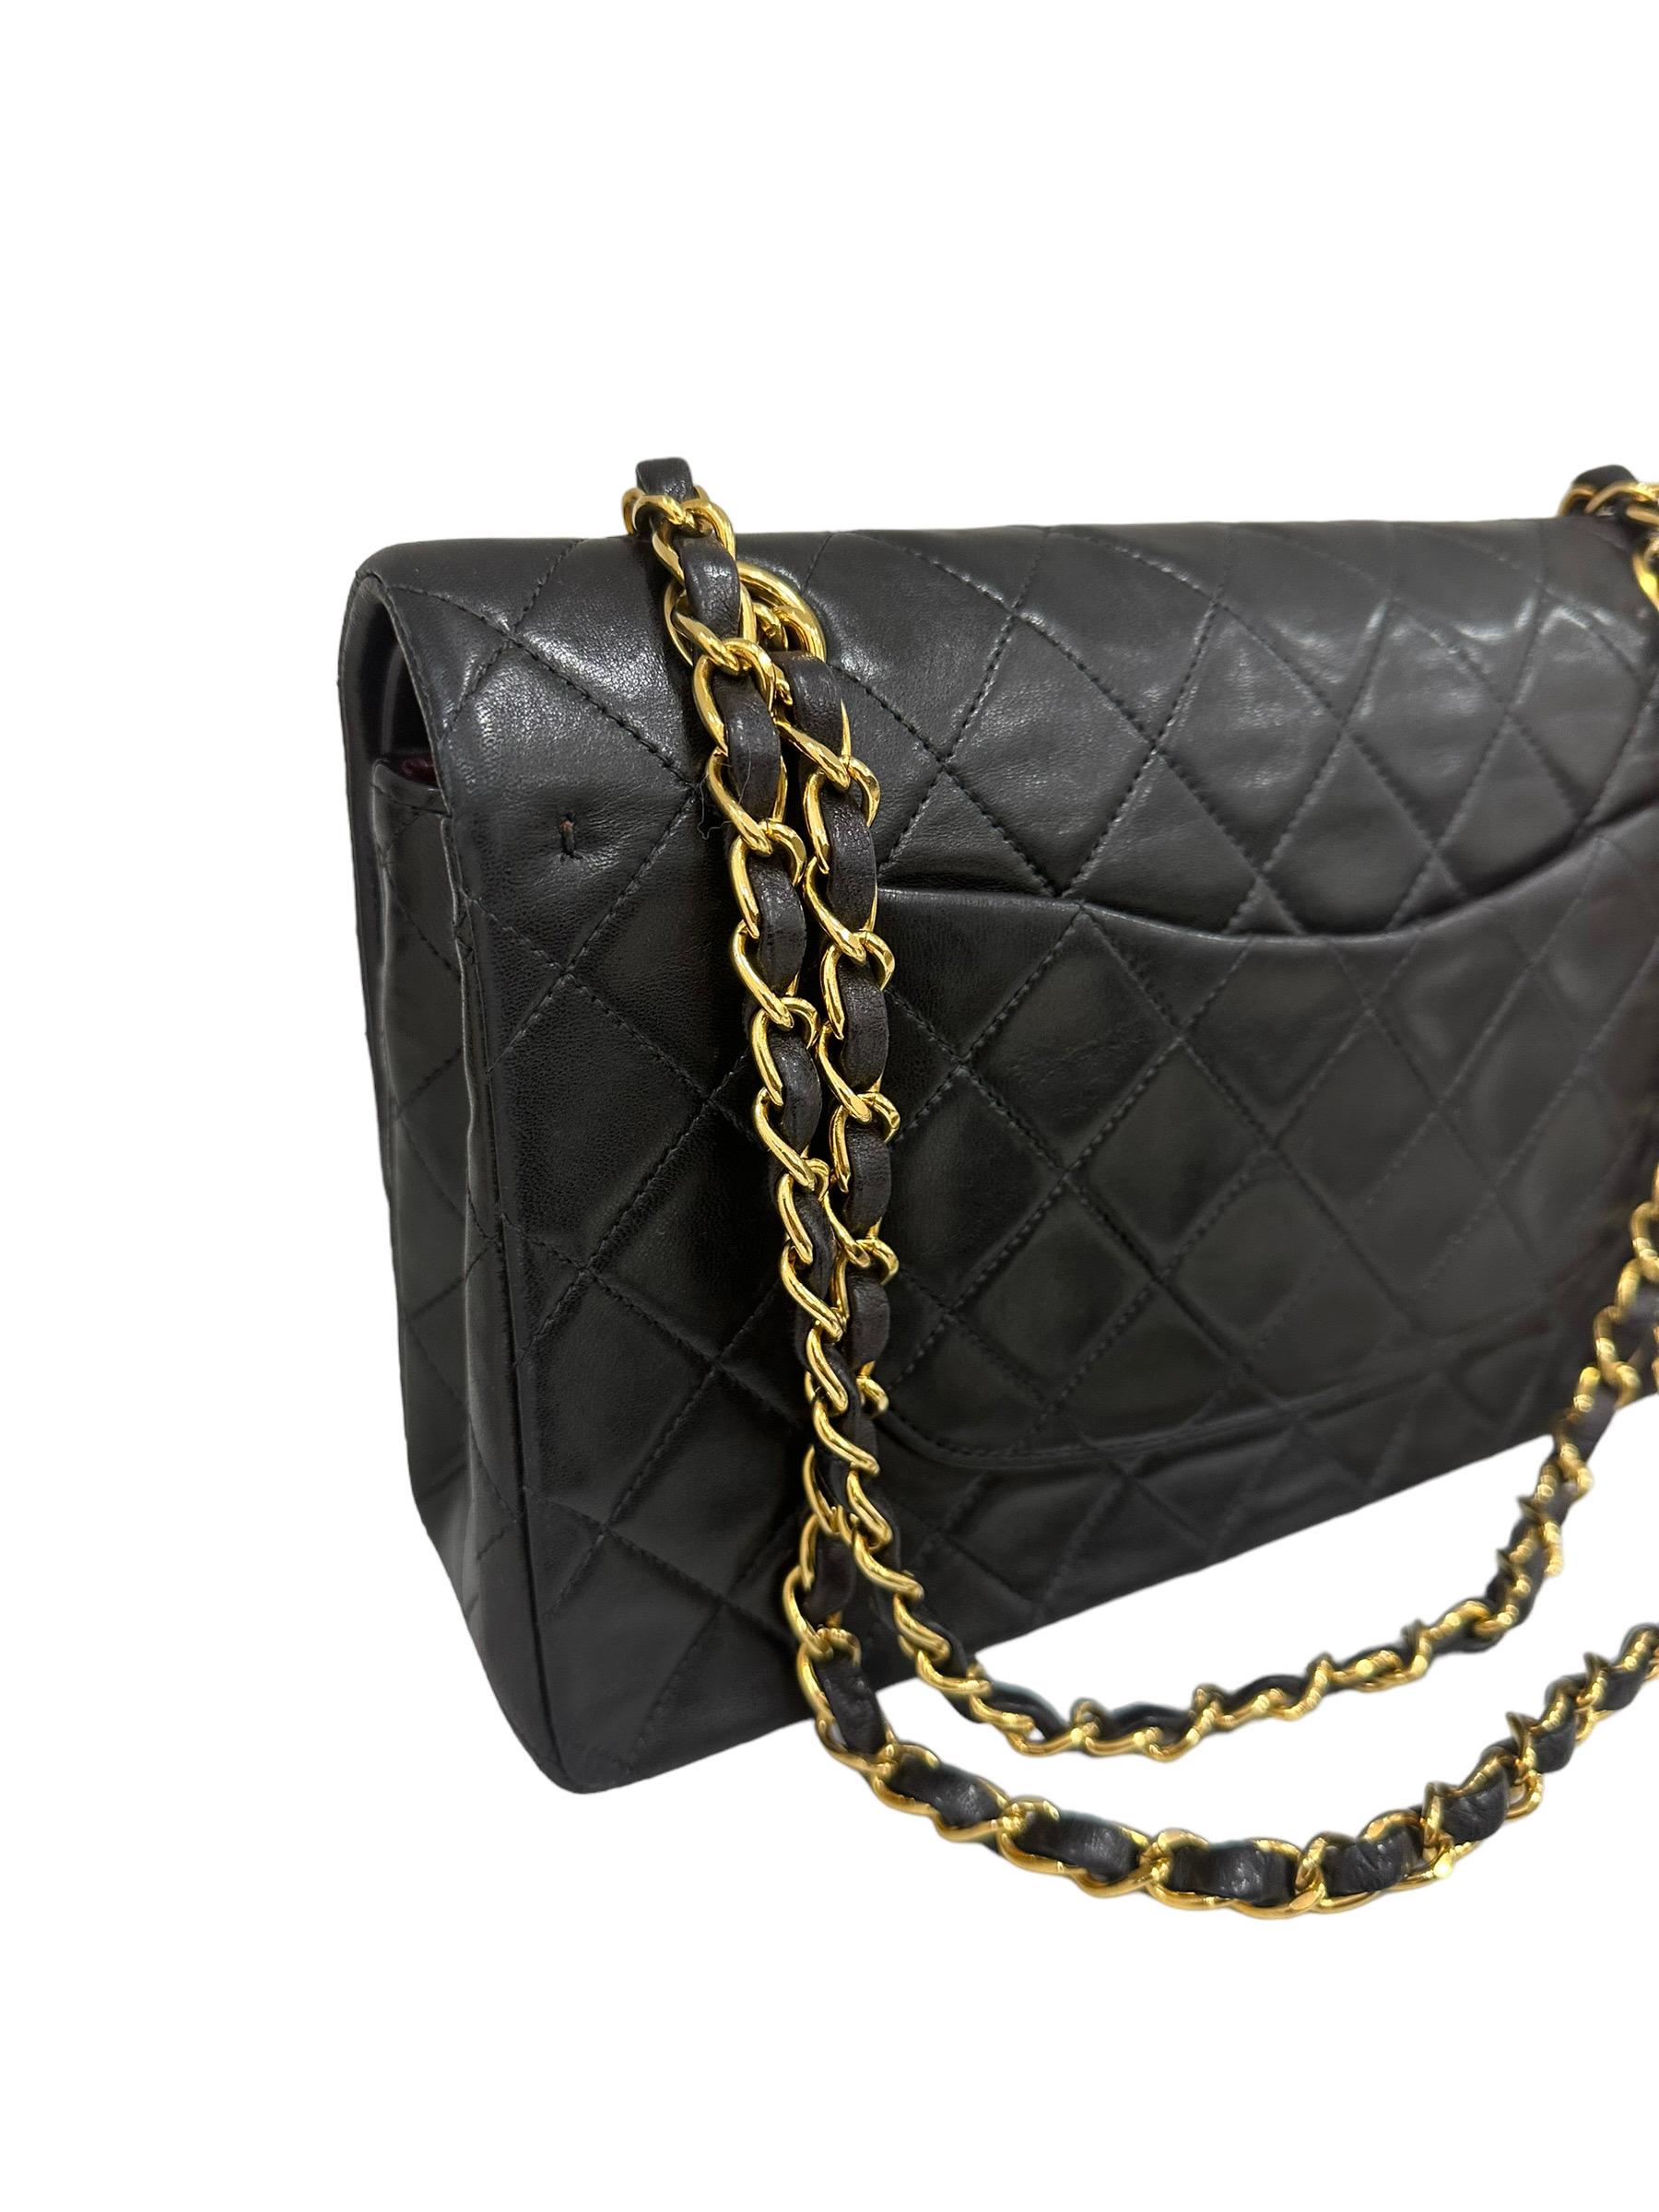 1996 Chanel Timeless Classic 2.55 Black Leather Top Shoulder Bag For Sale 10